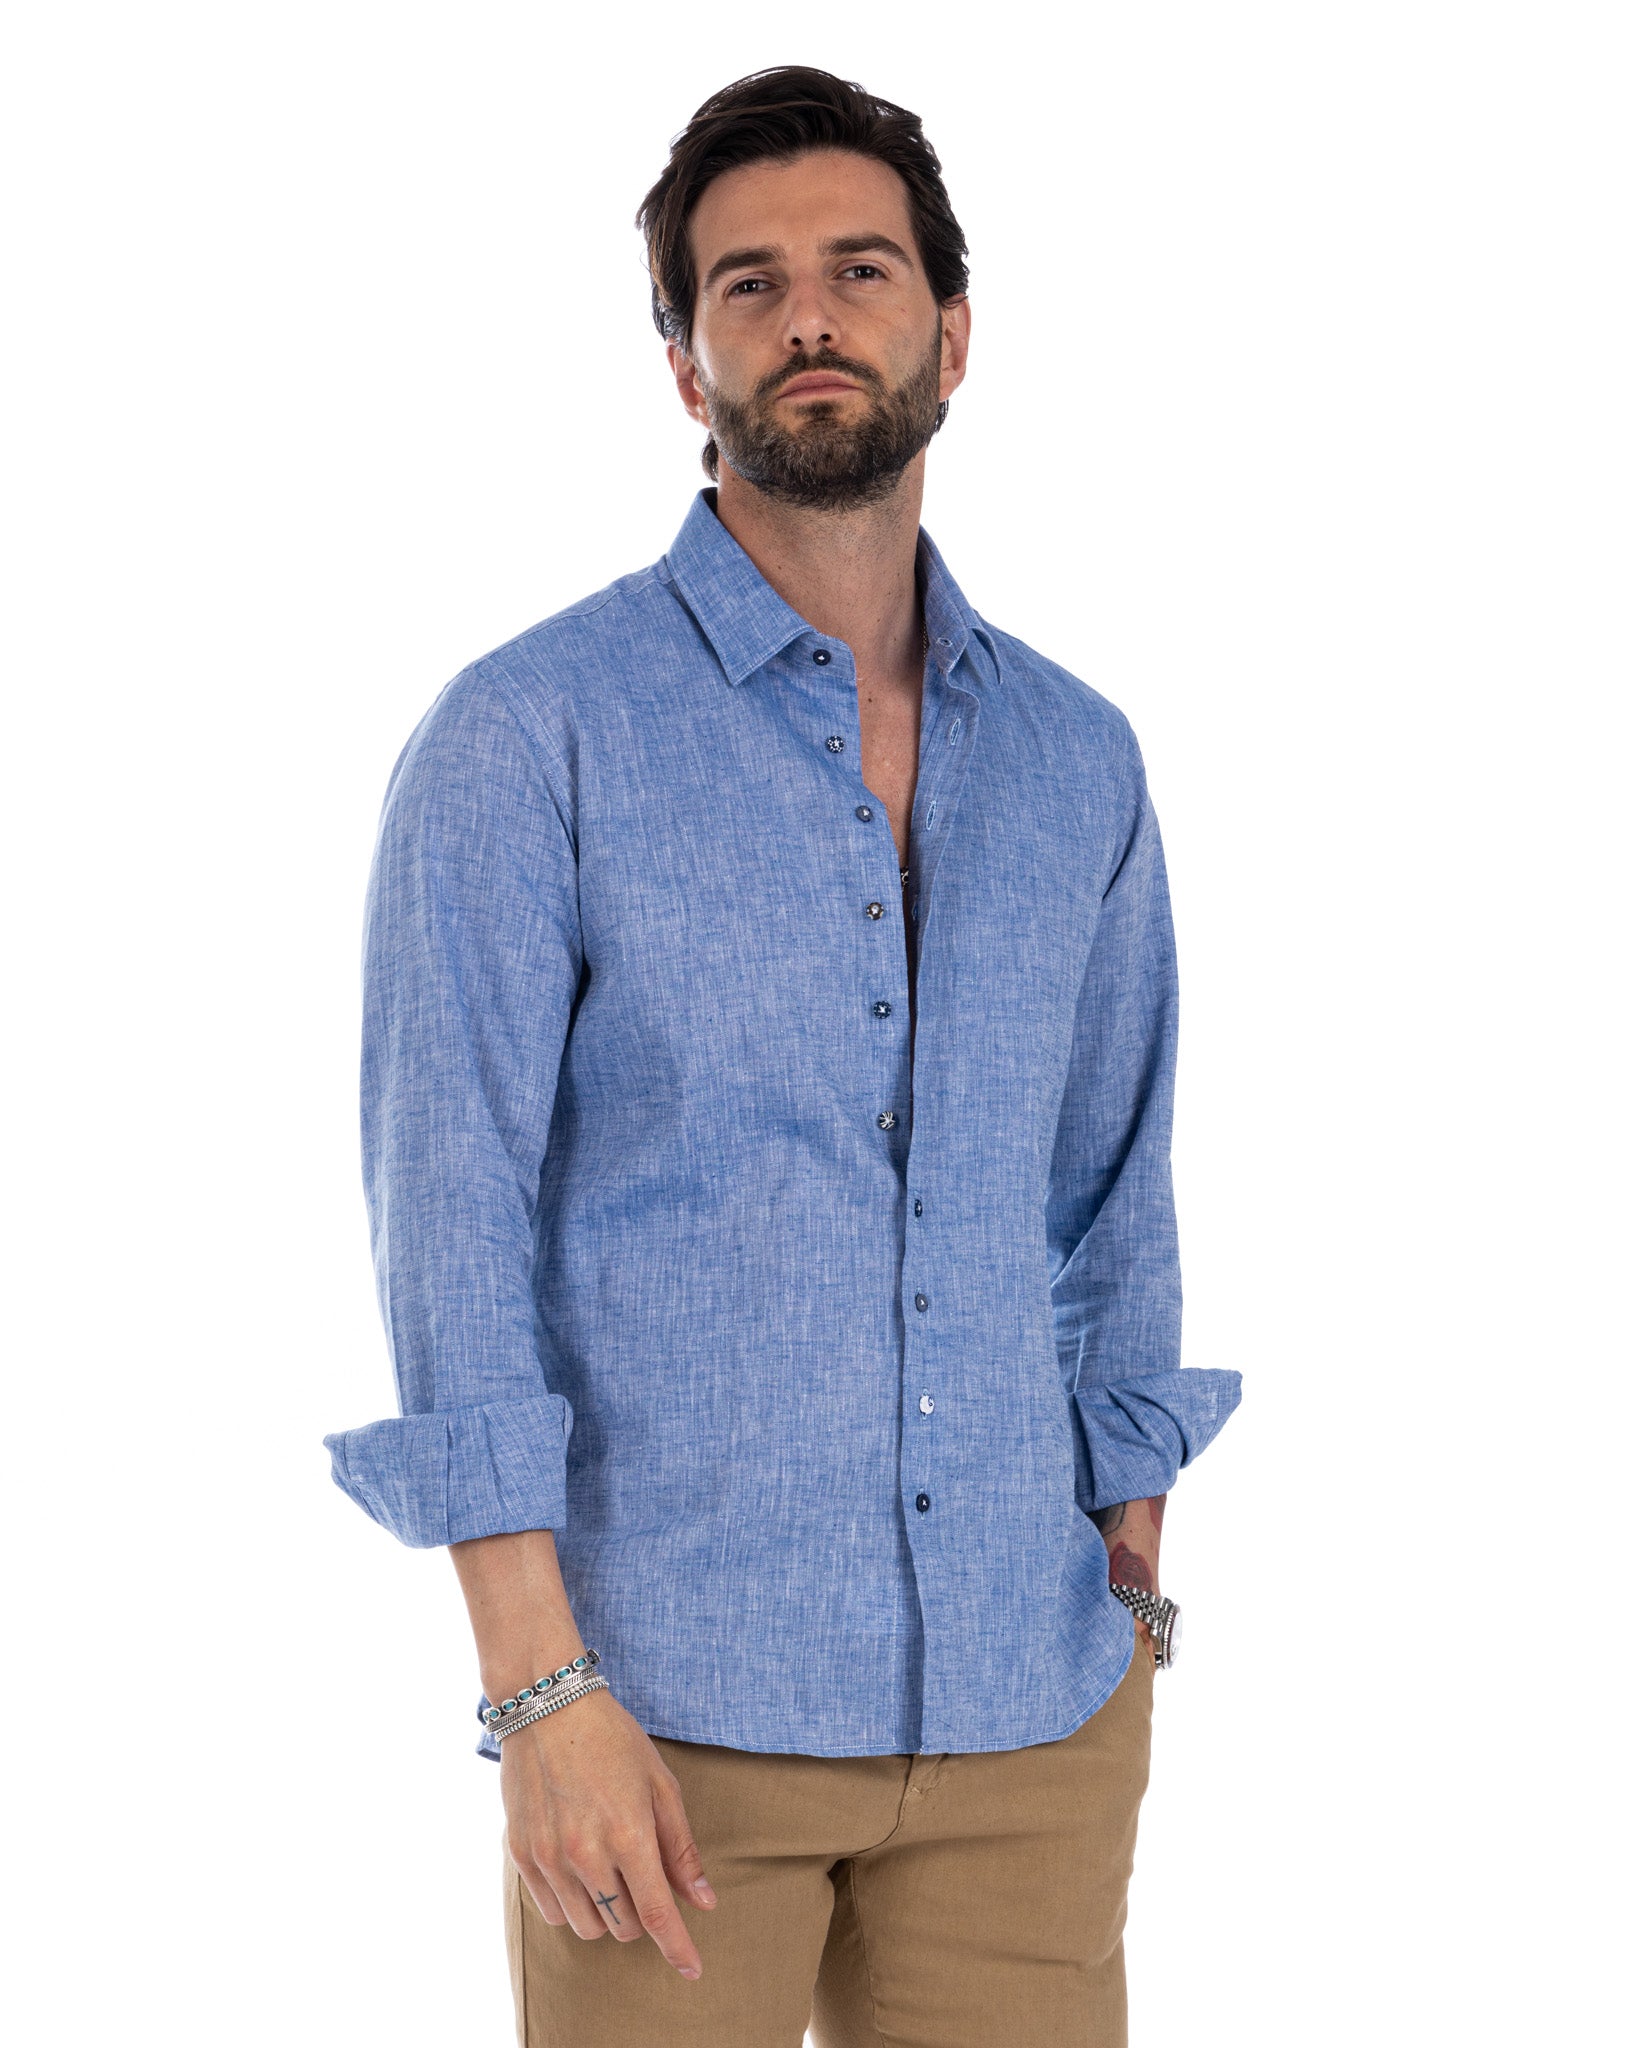 Praiano - camicia francese in lino denim